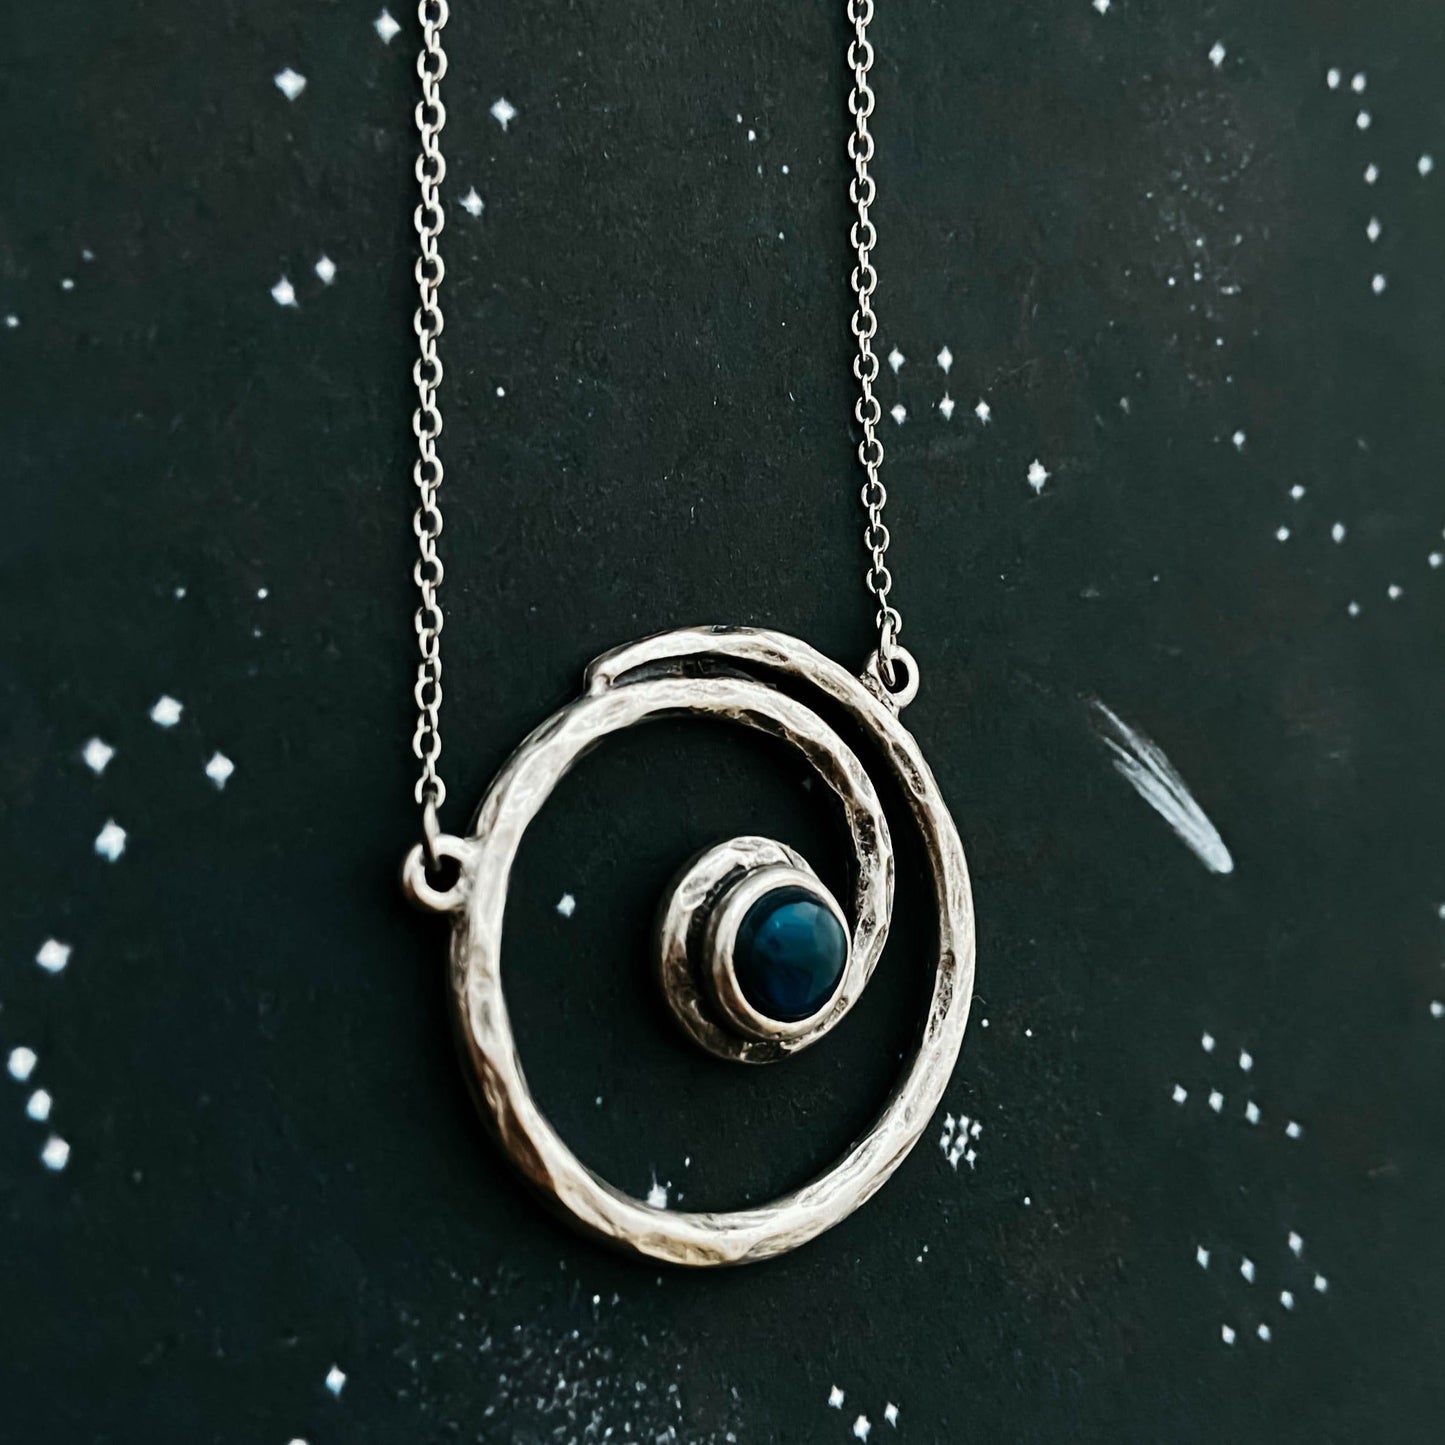 Milky Way Necklace | Spiral Silver Pendant with Labradorite